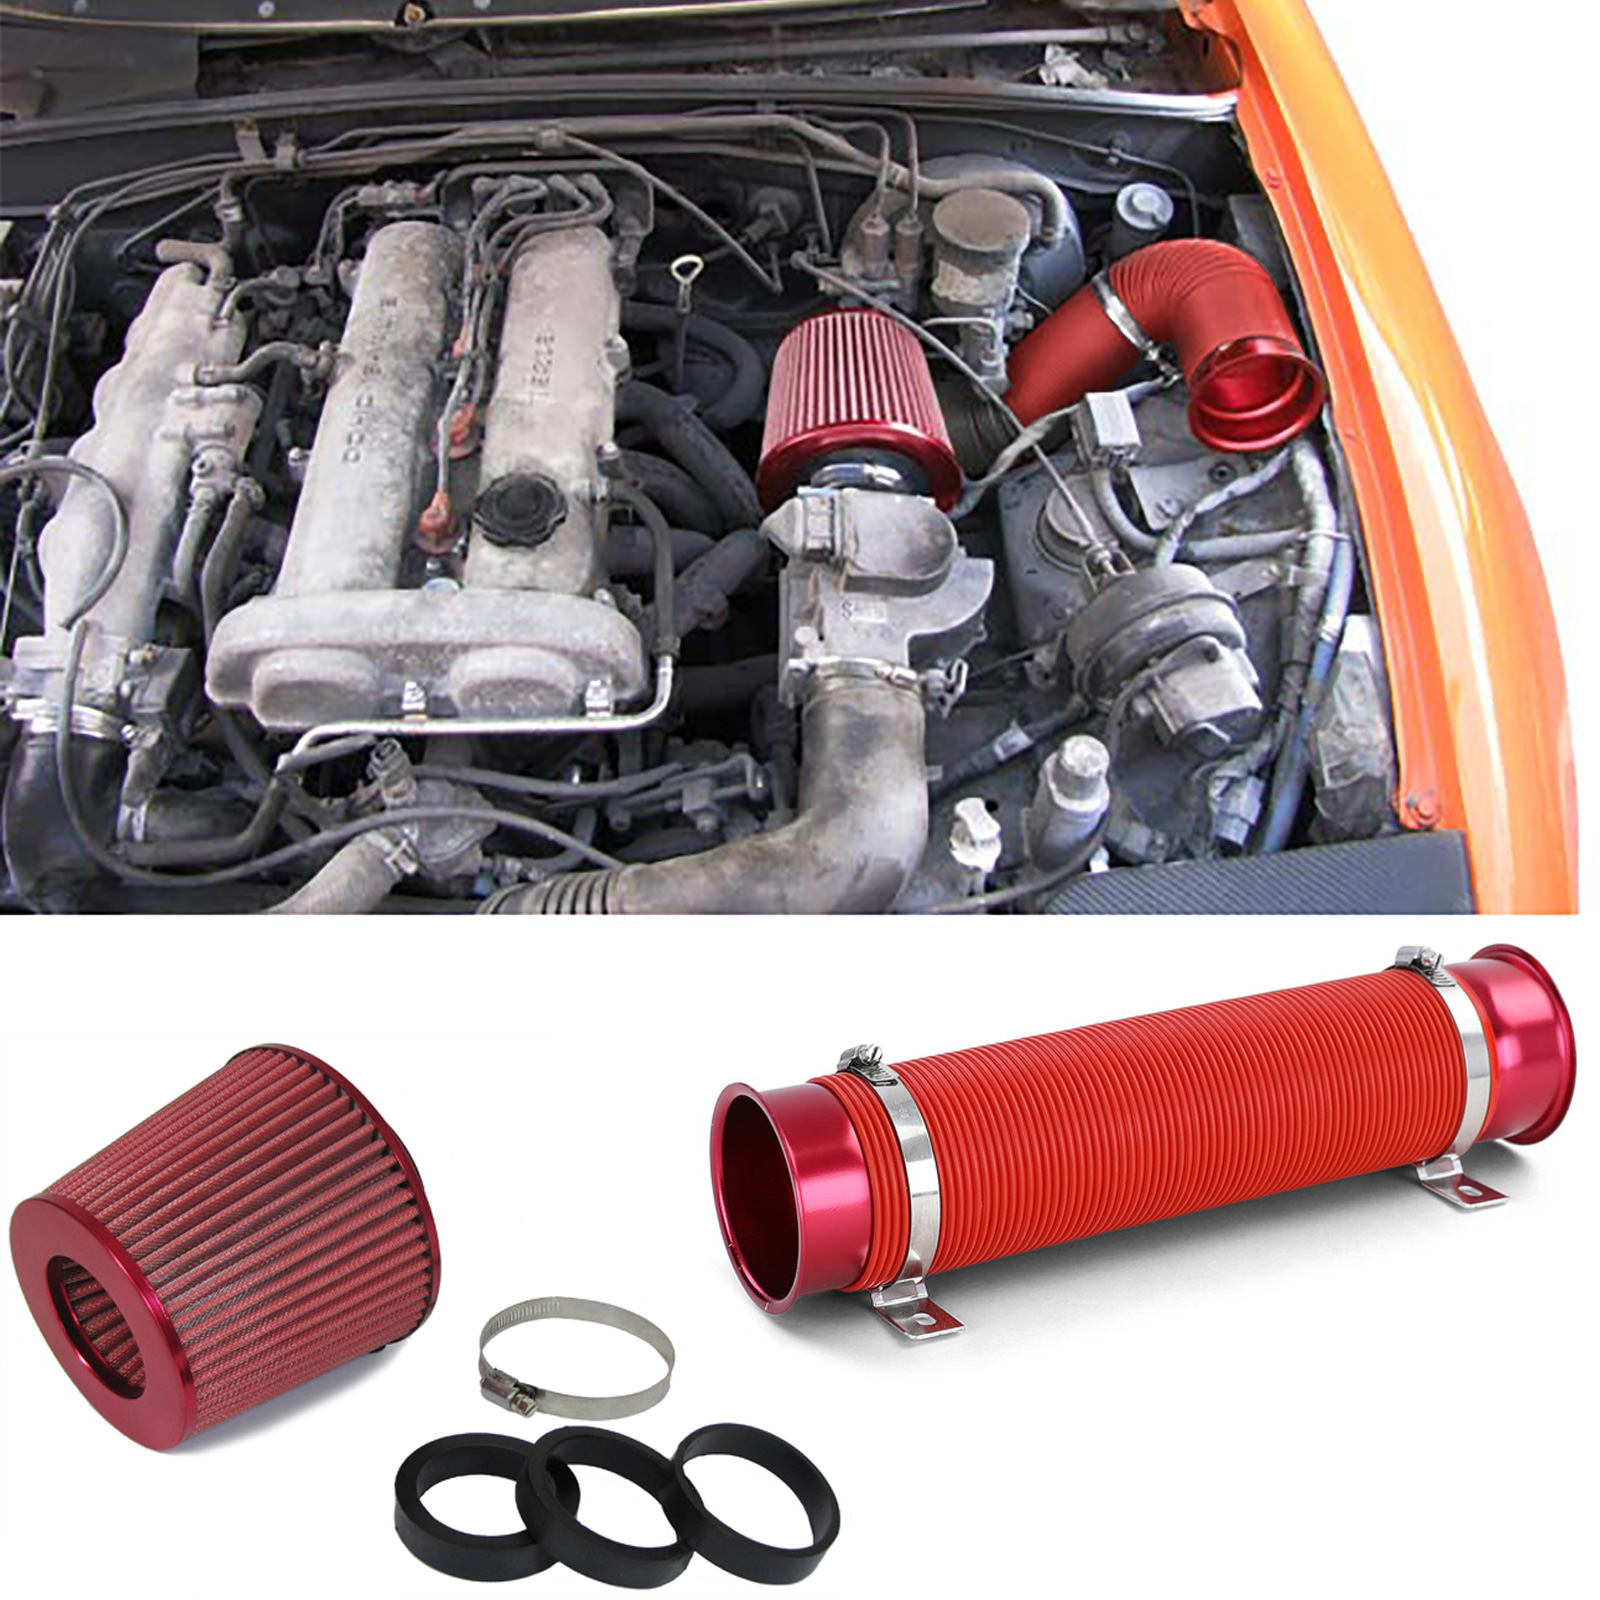 Cold Air Performance Kit mit Sport Luftfilter Set rot kaufen